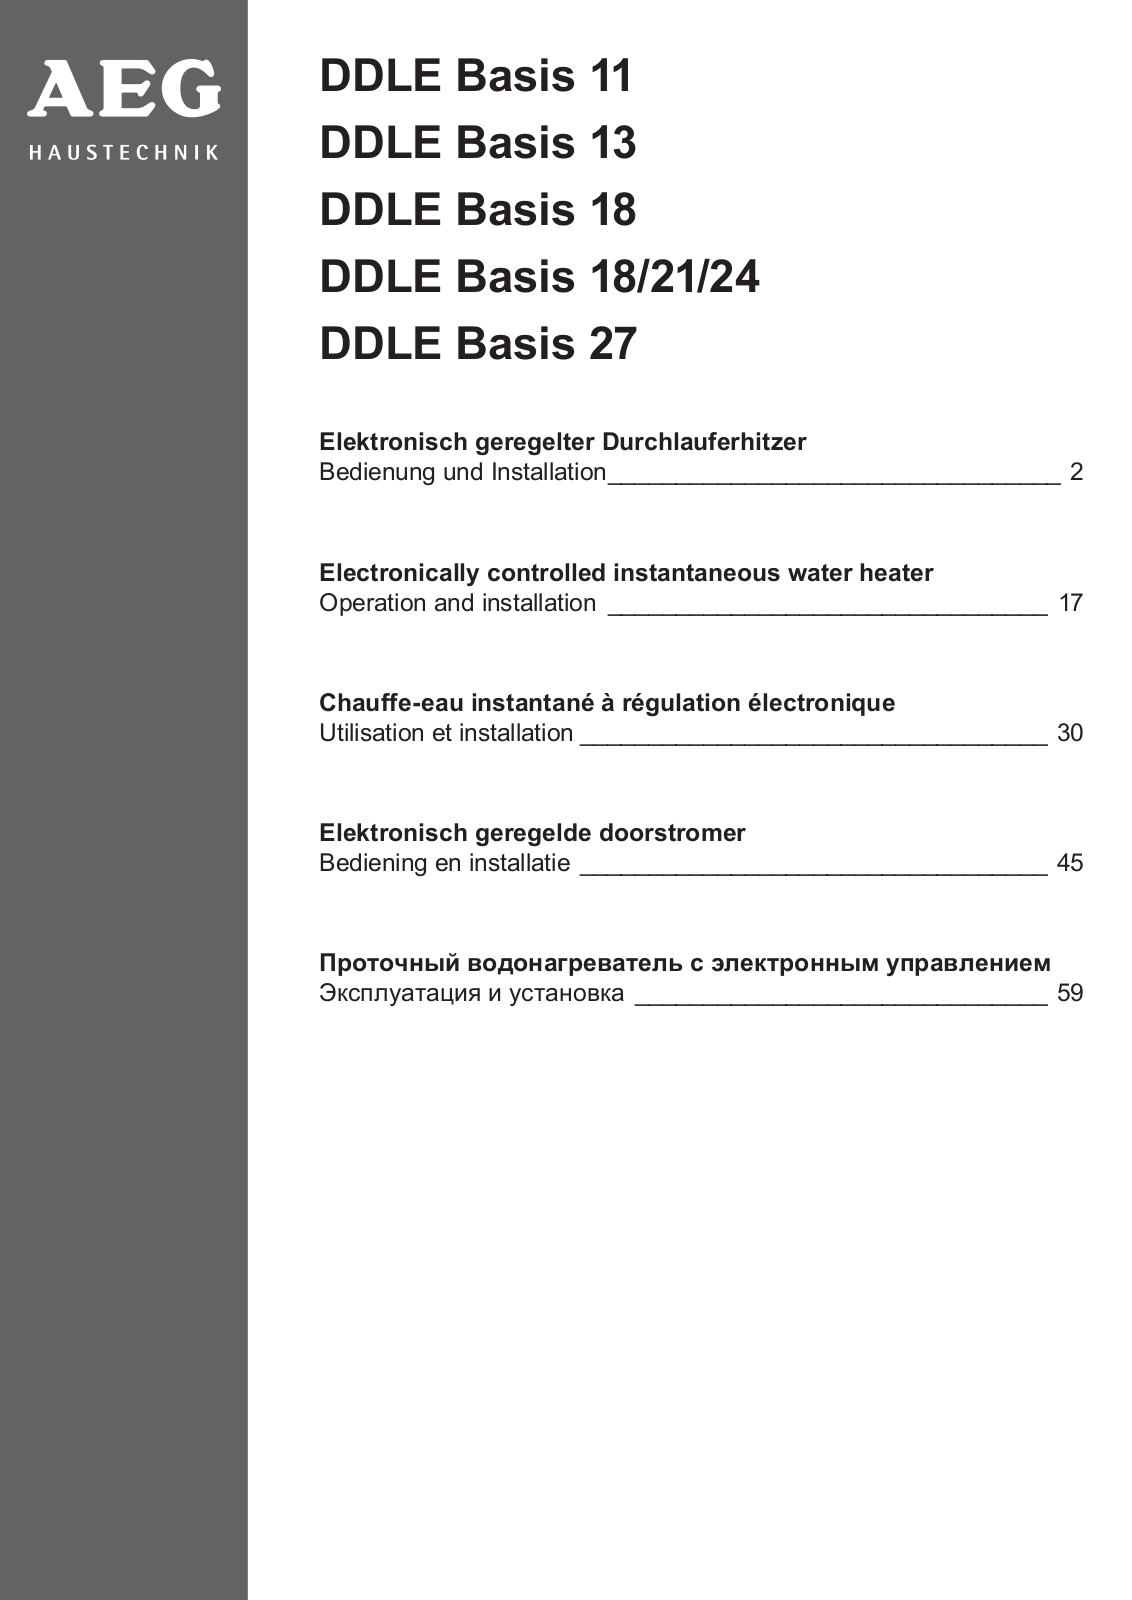 AEG DDLE Basis 11, DDLE Basis 13, DDLE Basis 18, DDLE Basis 21, DDLE Basis 24 operation manual